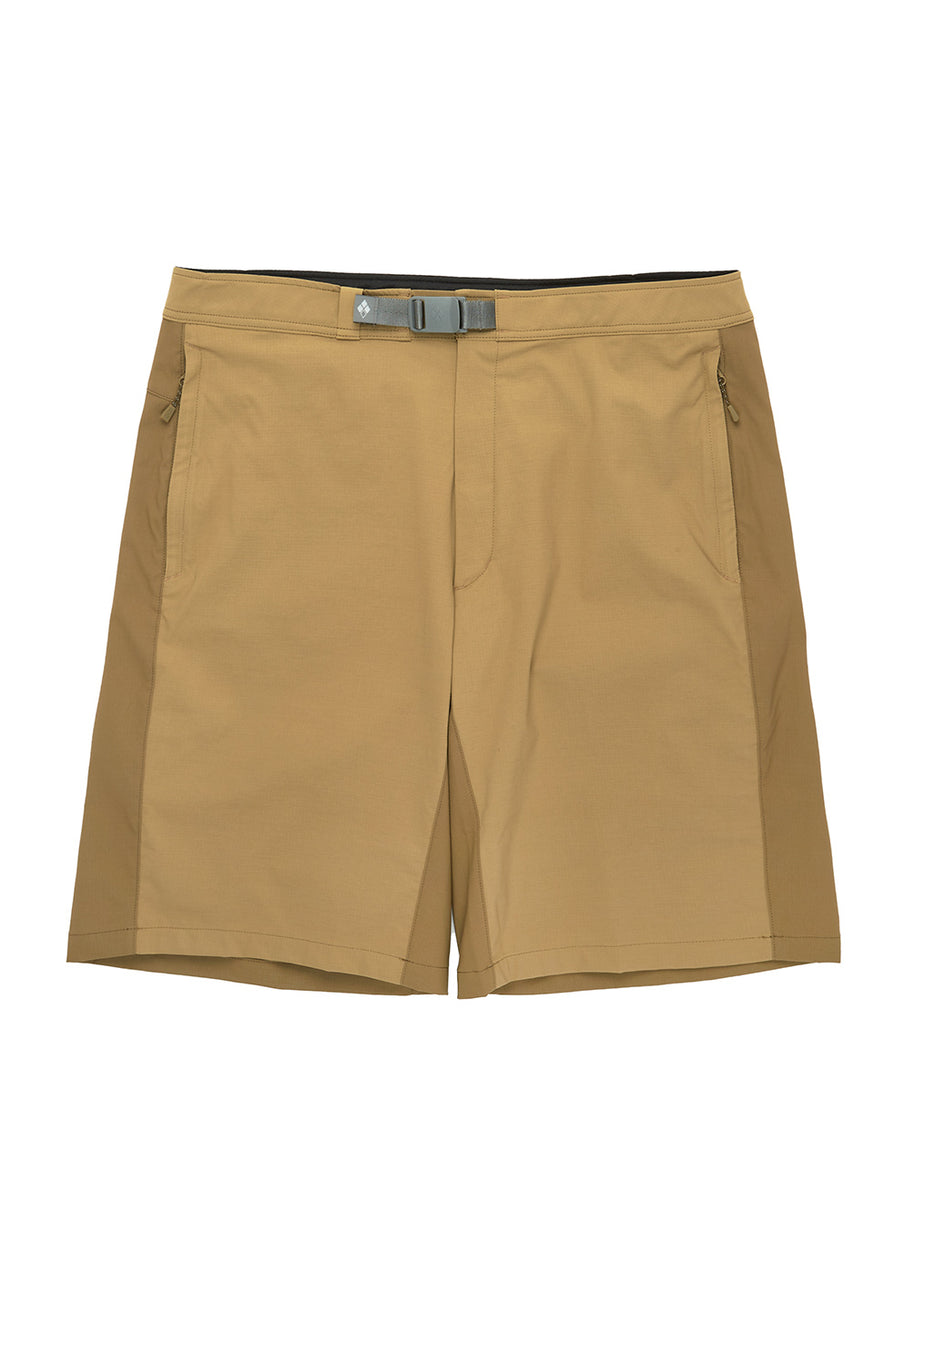 Montbell Men's Canyon Shorts - Tan